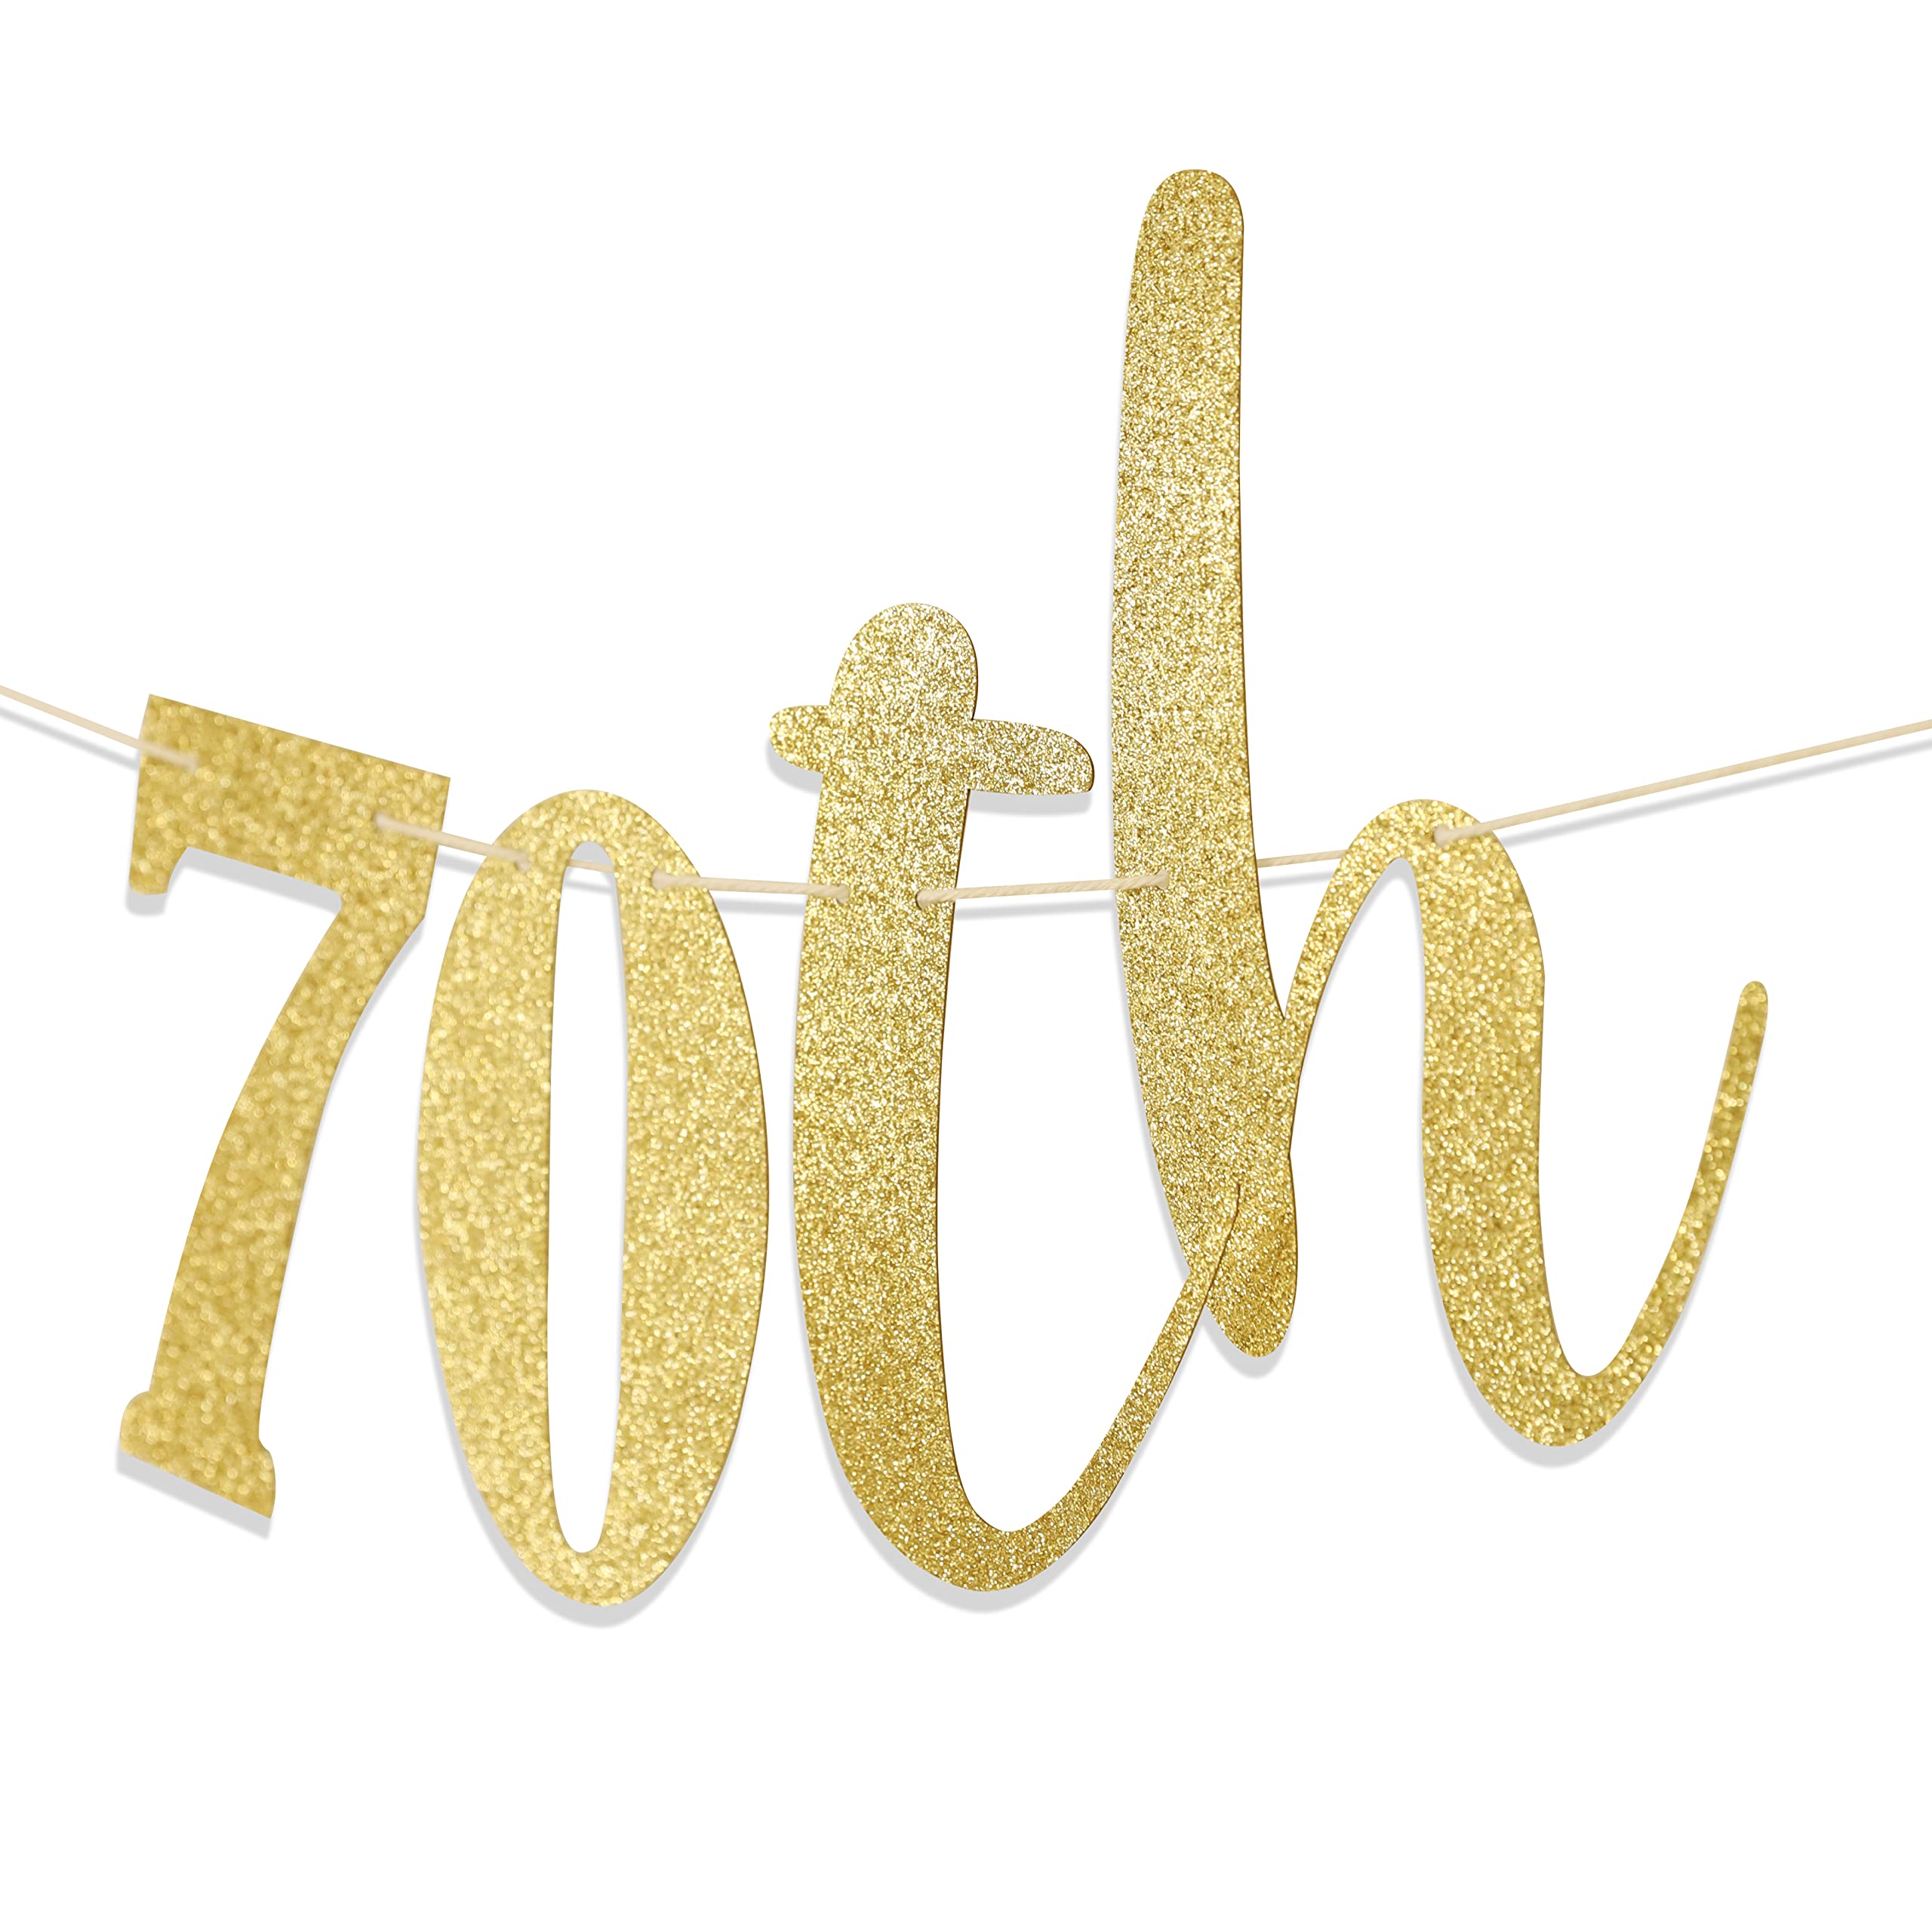 Happy 70th Birthday Banner - 70th Birthday Banner,70 Banner Gold,70th Anniversary Banner Gold,70th Birthday Banner for Women/men,happy 70th Birthday Banner Party Decorations